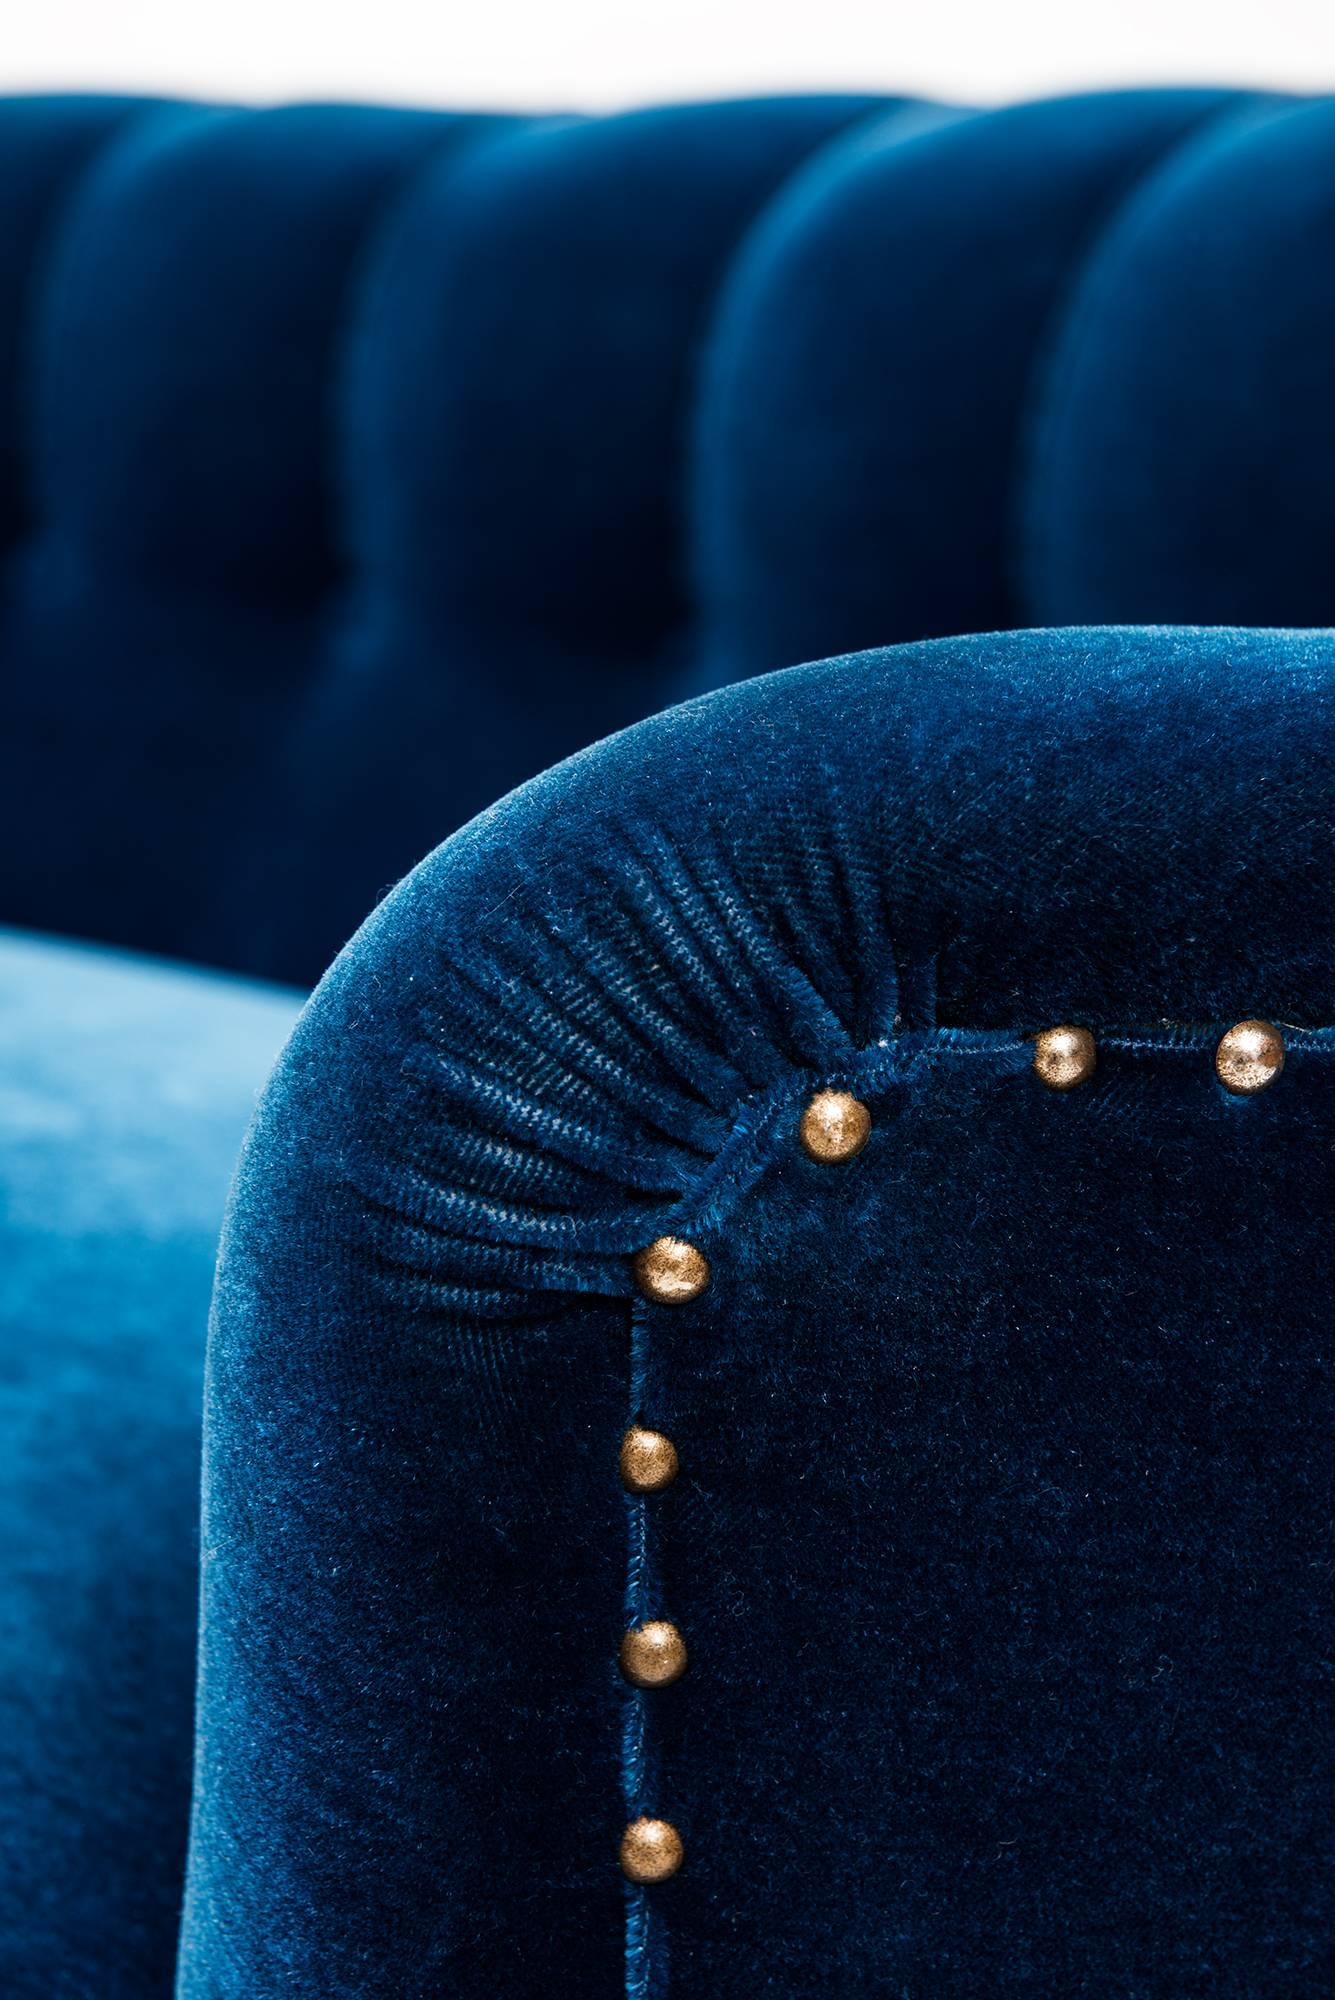 blue curved sofa